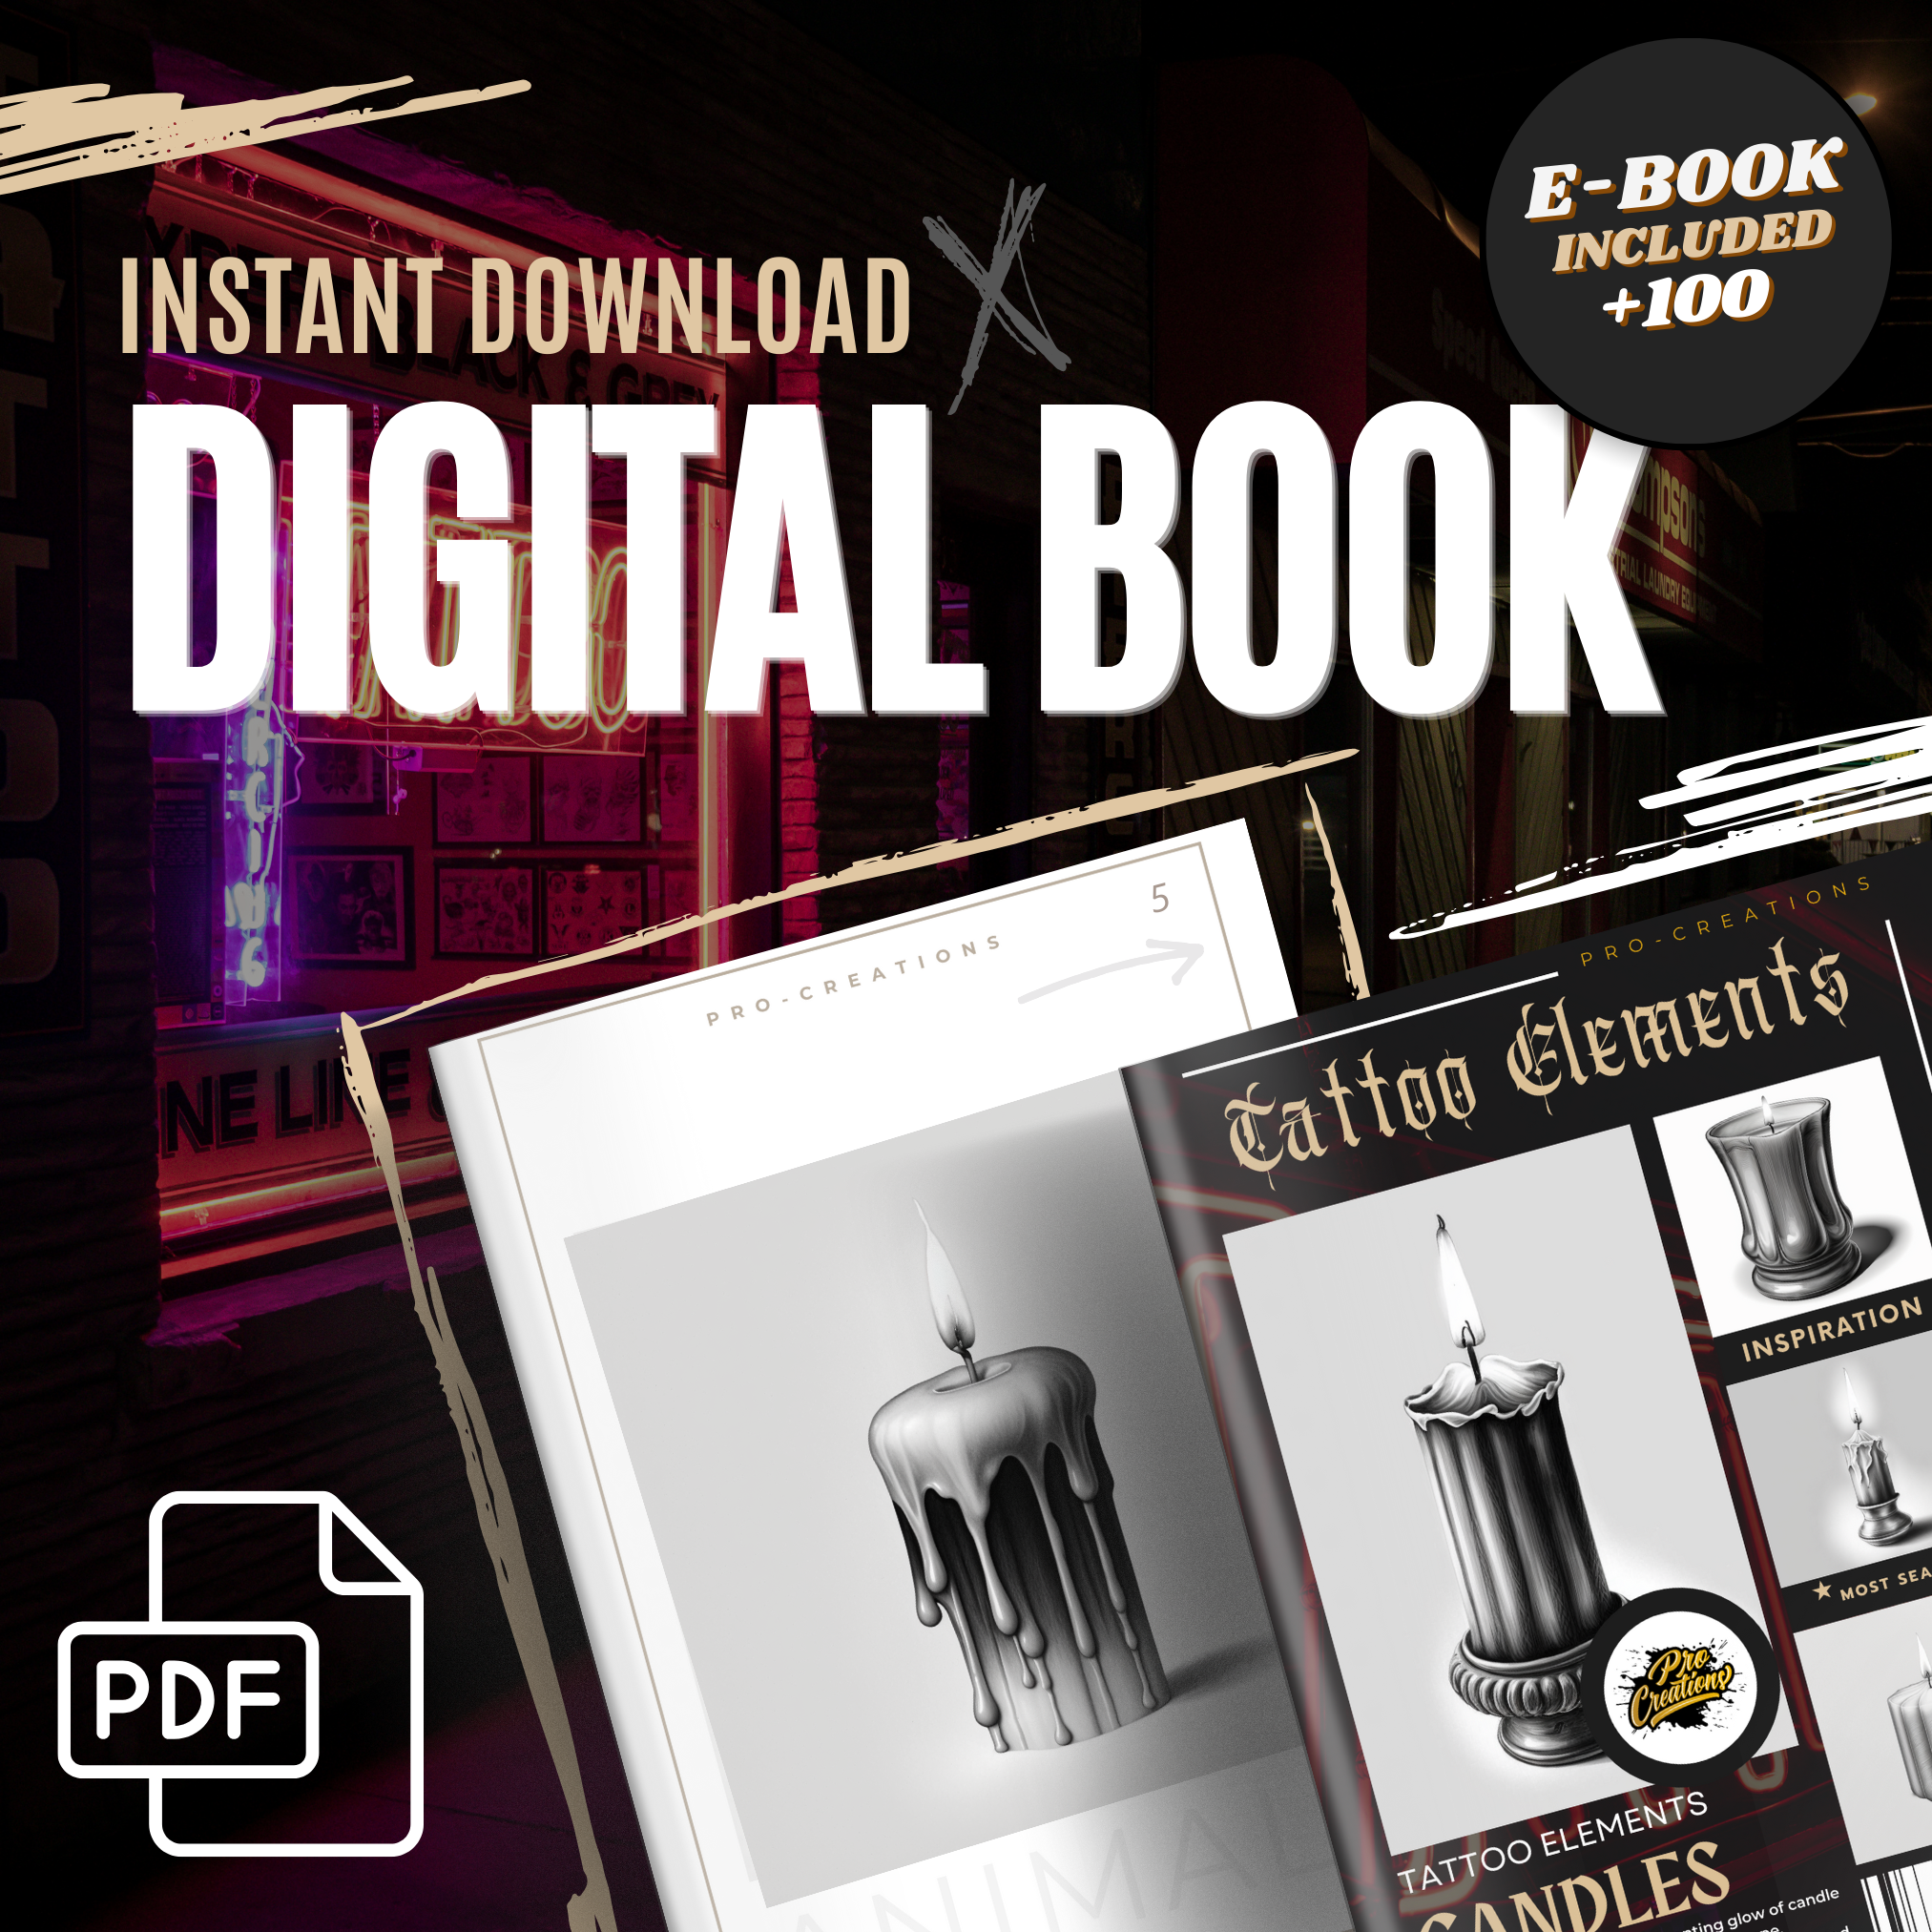 Kerzen Digitale Tattoo-Element-Design-Sammlung: 100 Procreate &amp; Skizzenbuch-Bilder